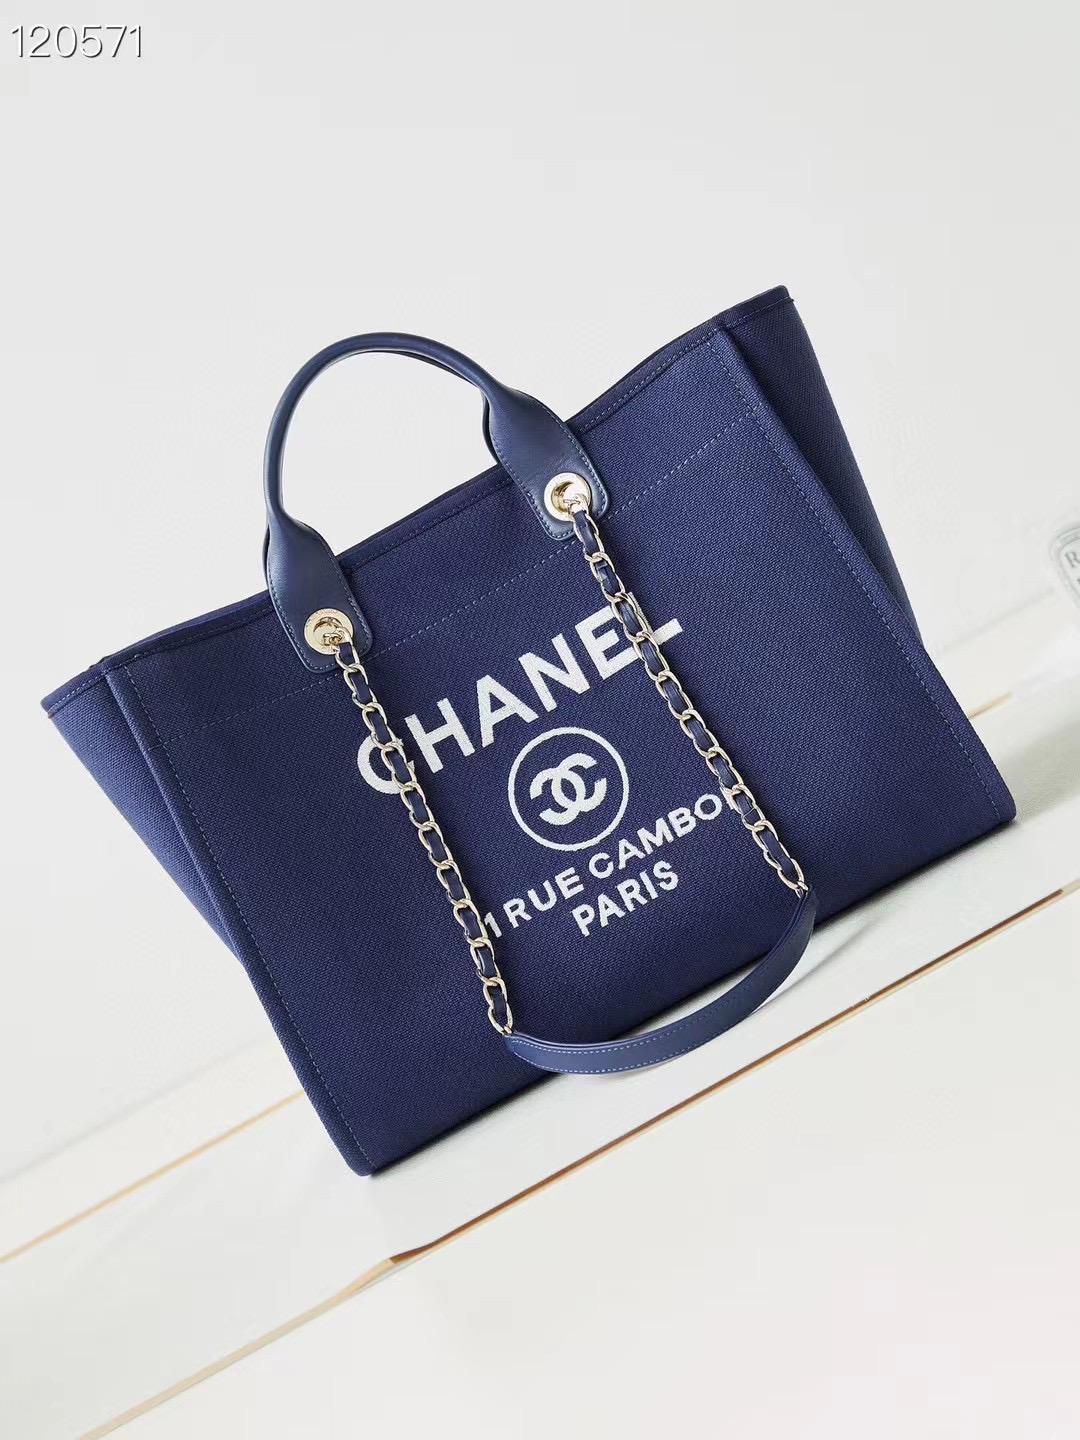 Chanel LARGE SHOPPING BAG 66941 Blue